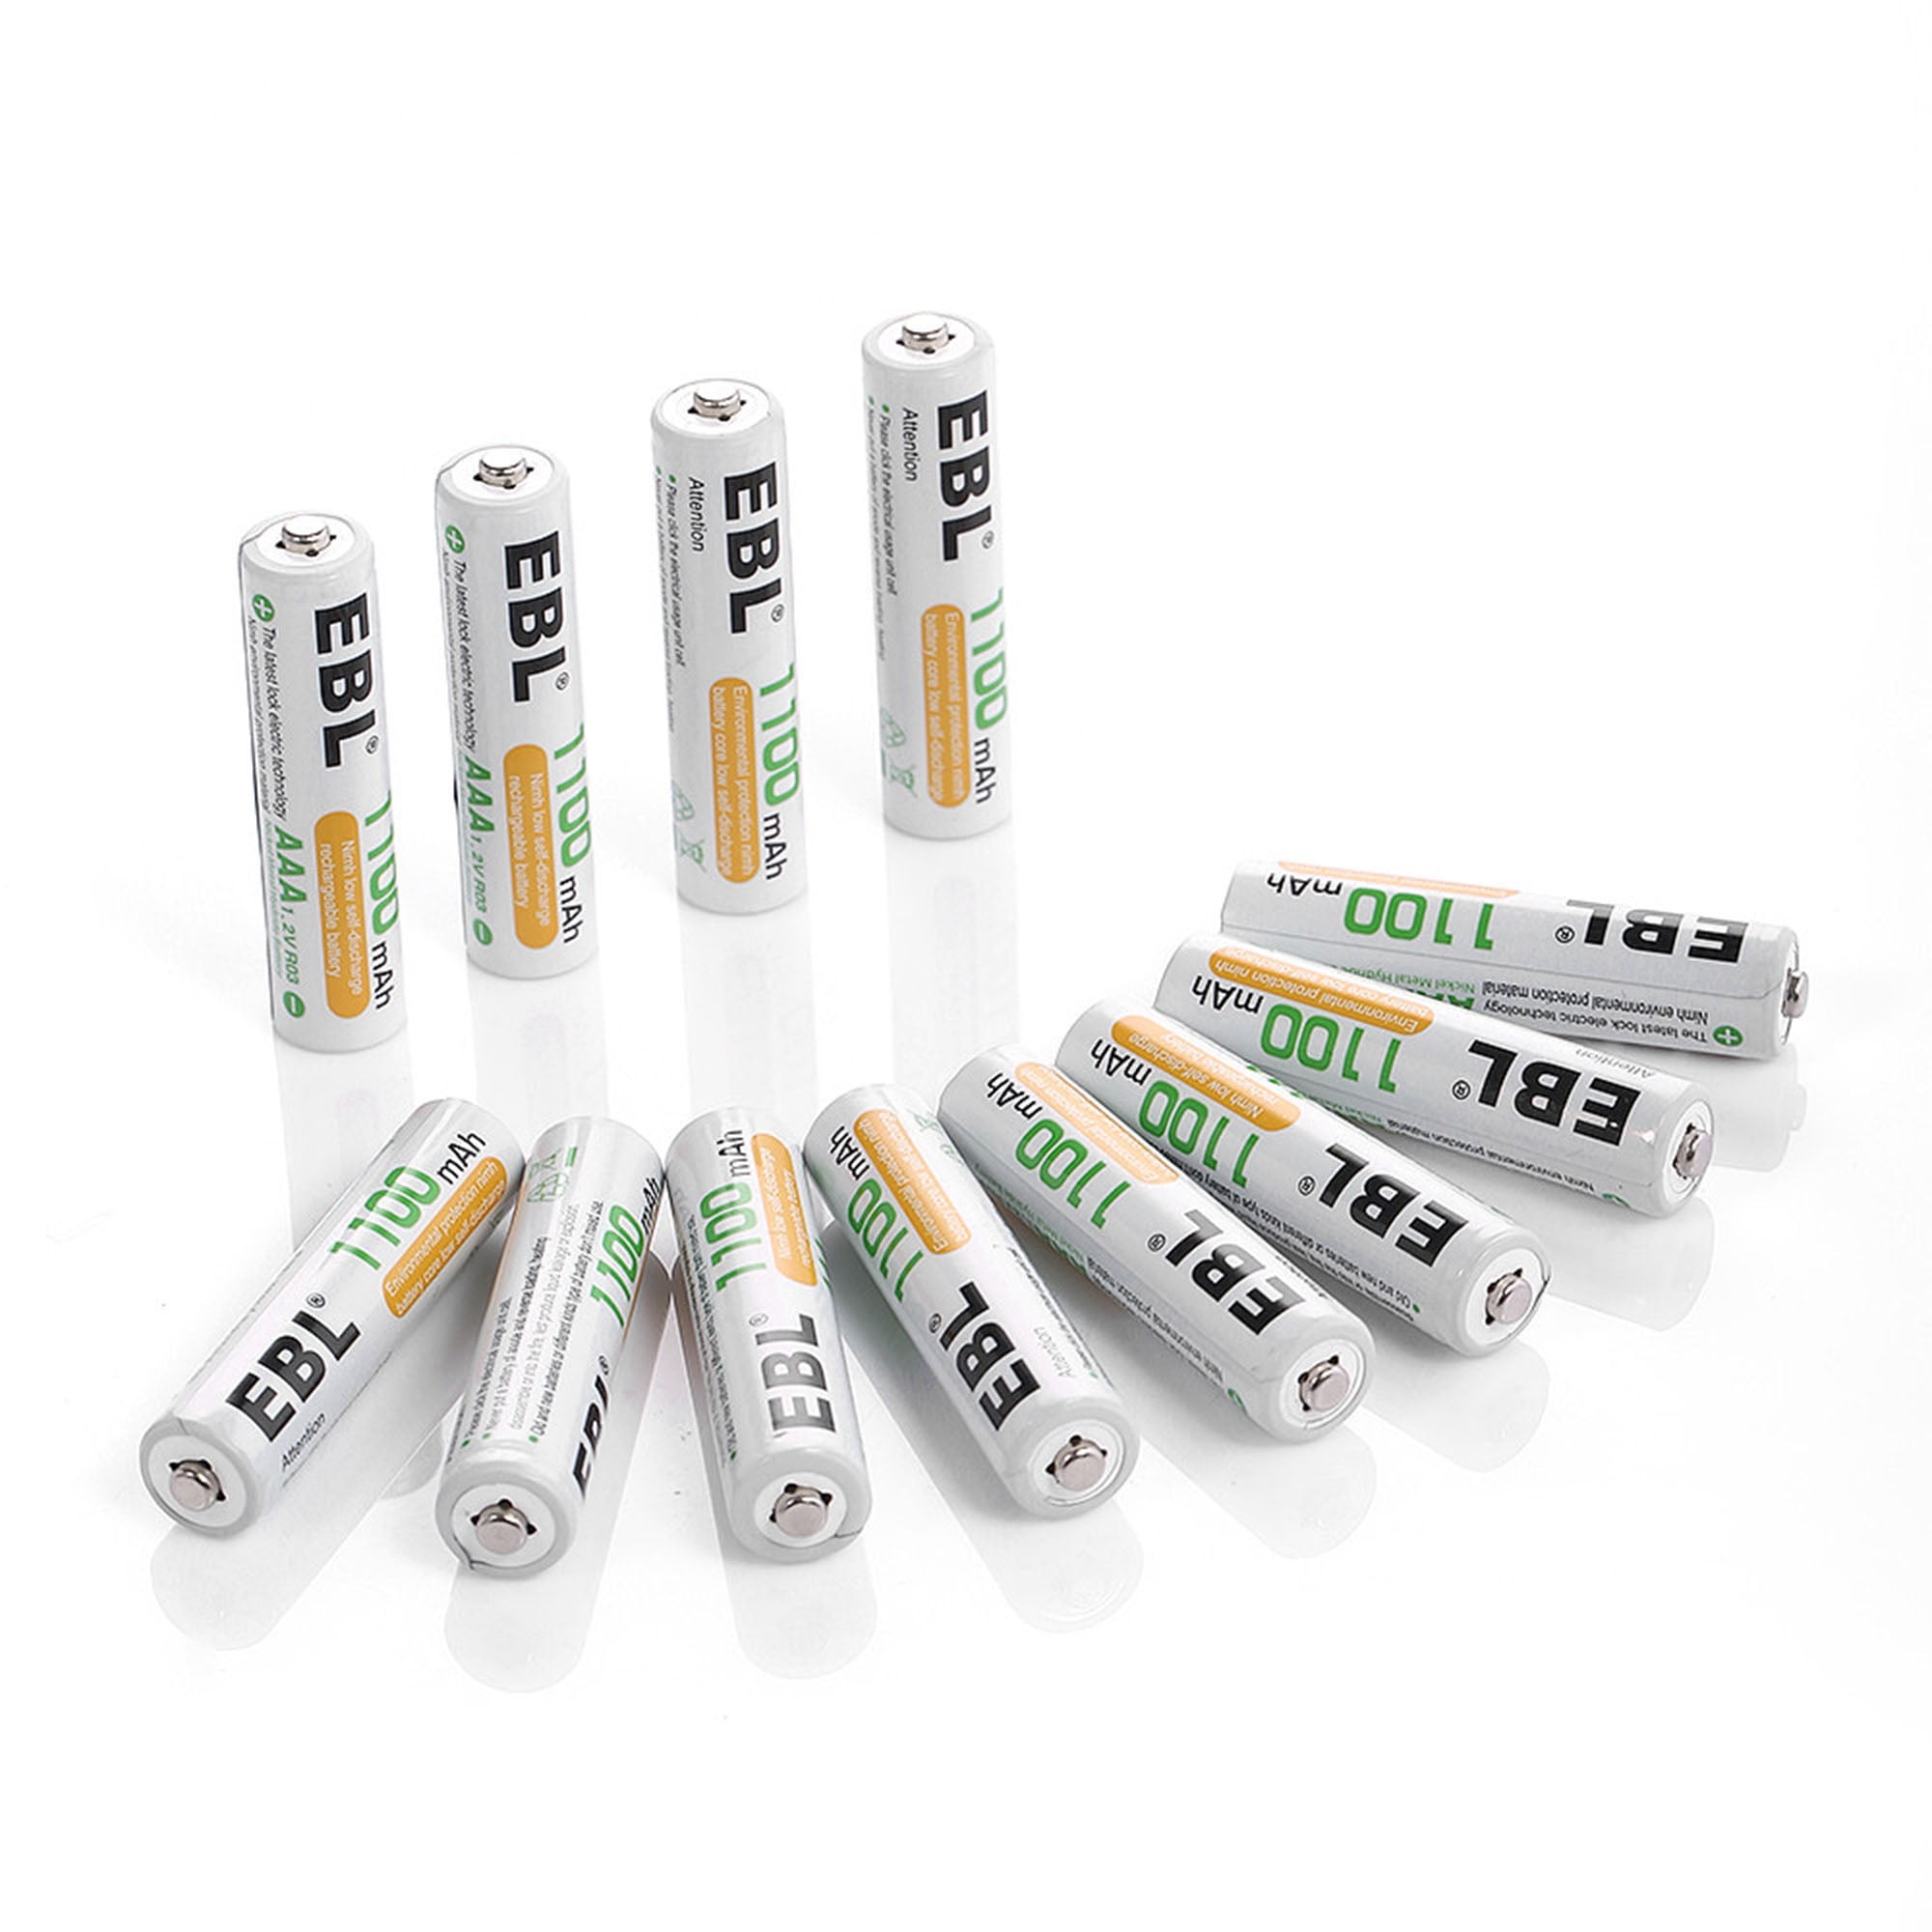 EBL Cargador de batería AA AAA con pilas AAA recargables – 8 paquetes de  1.2 V 1100 mAh batería AAA NIMH y kit de cargador de batería independiente